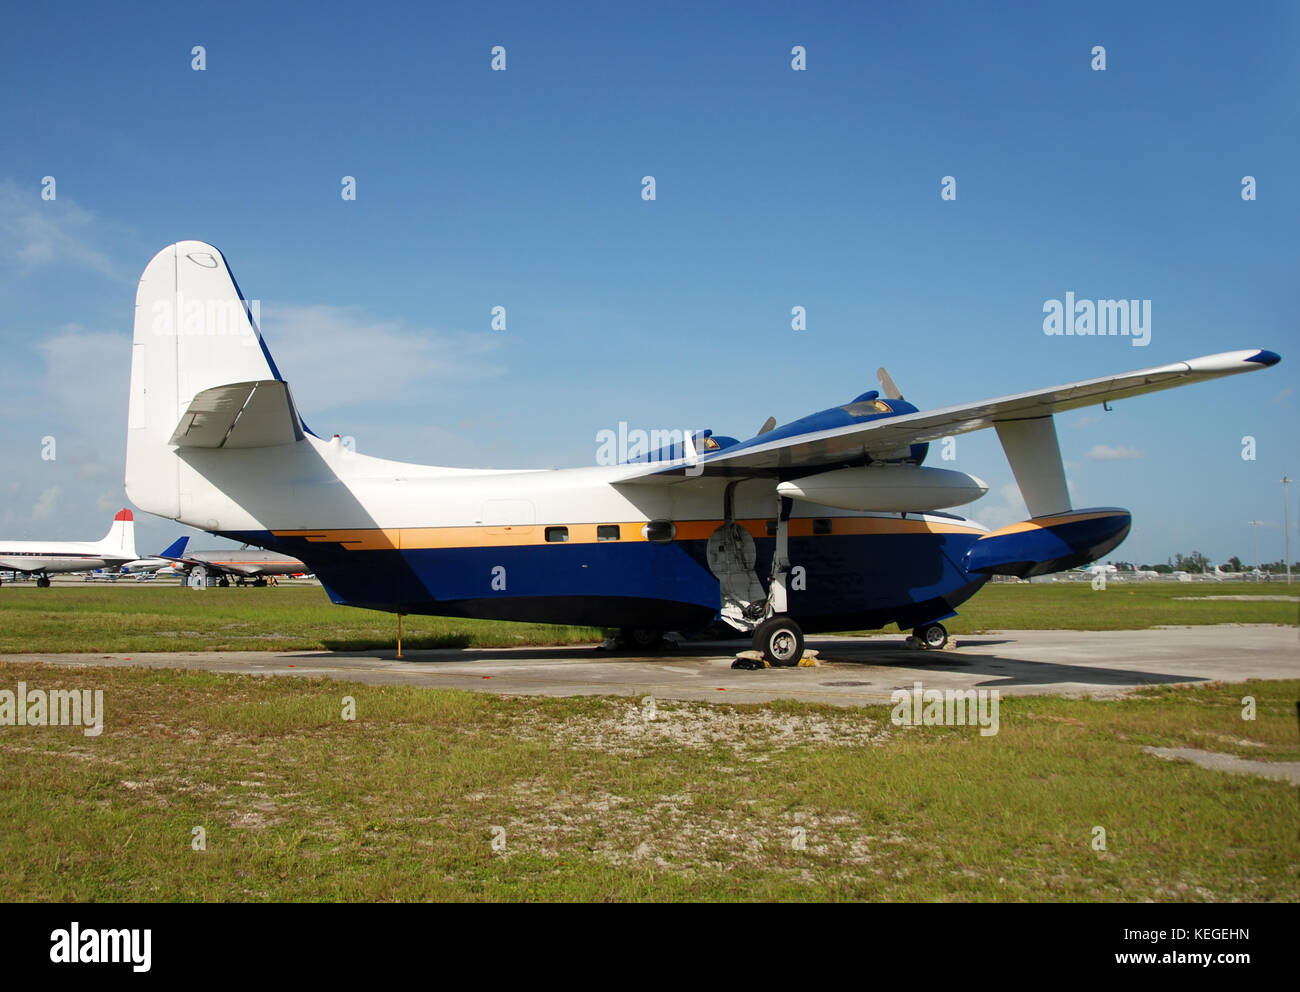 Seaplane on the ground Stock Photo